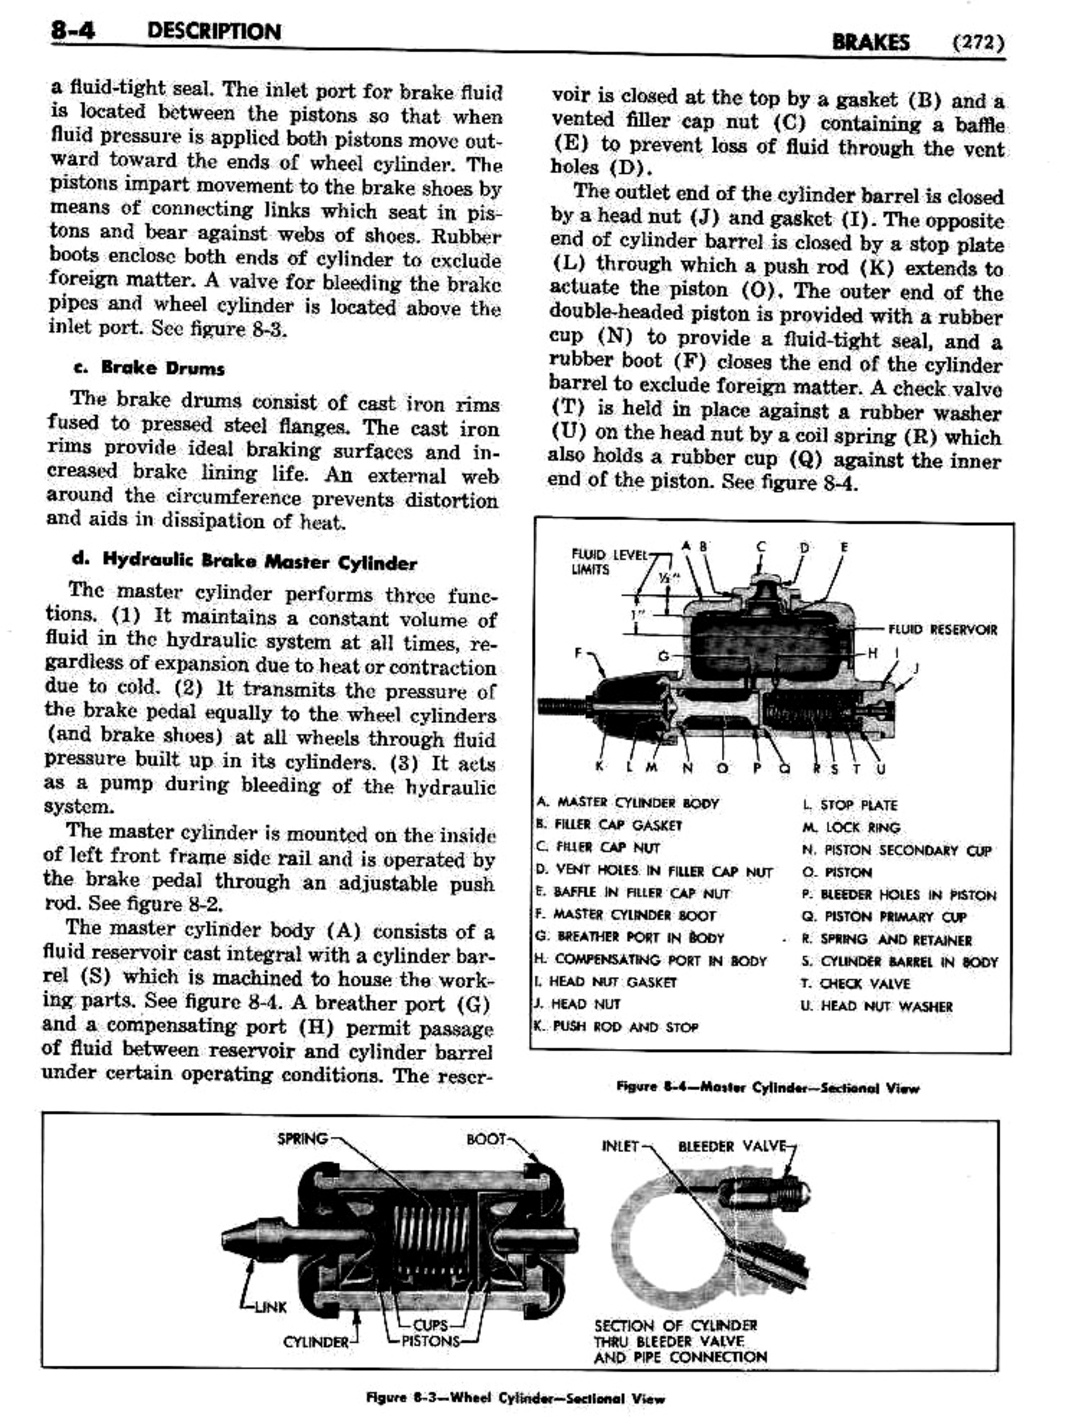 n_09 1951 Buick Shop Manual - Brakes-004-004.jpg